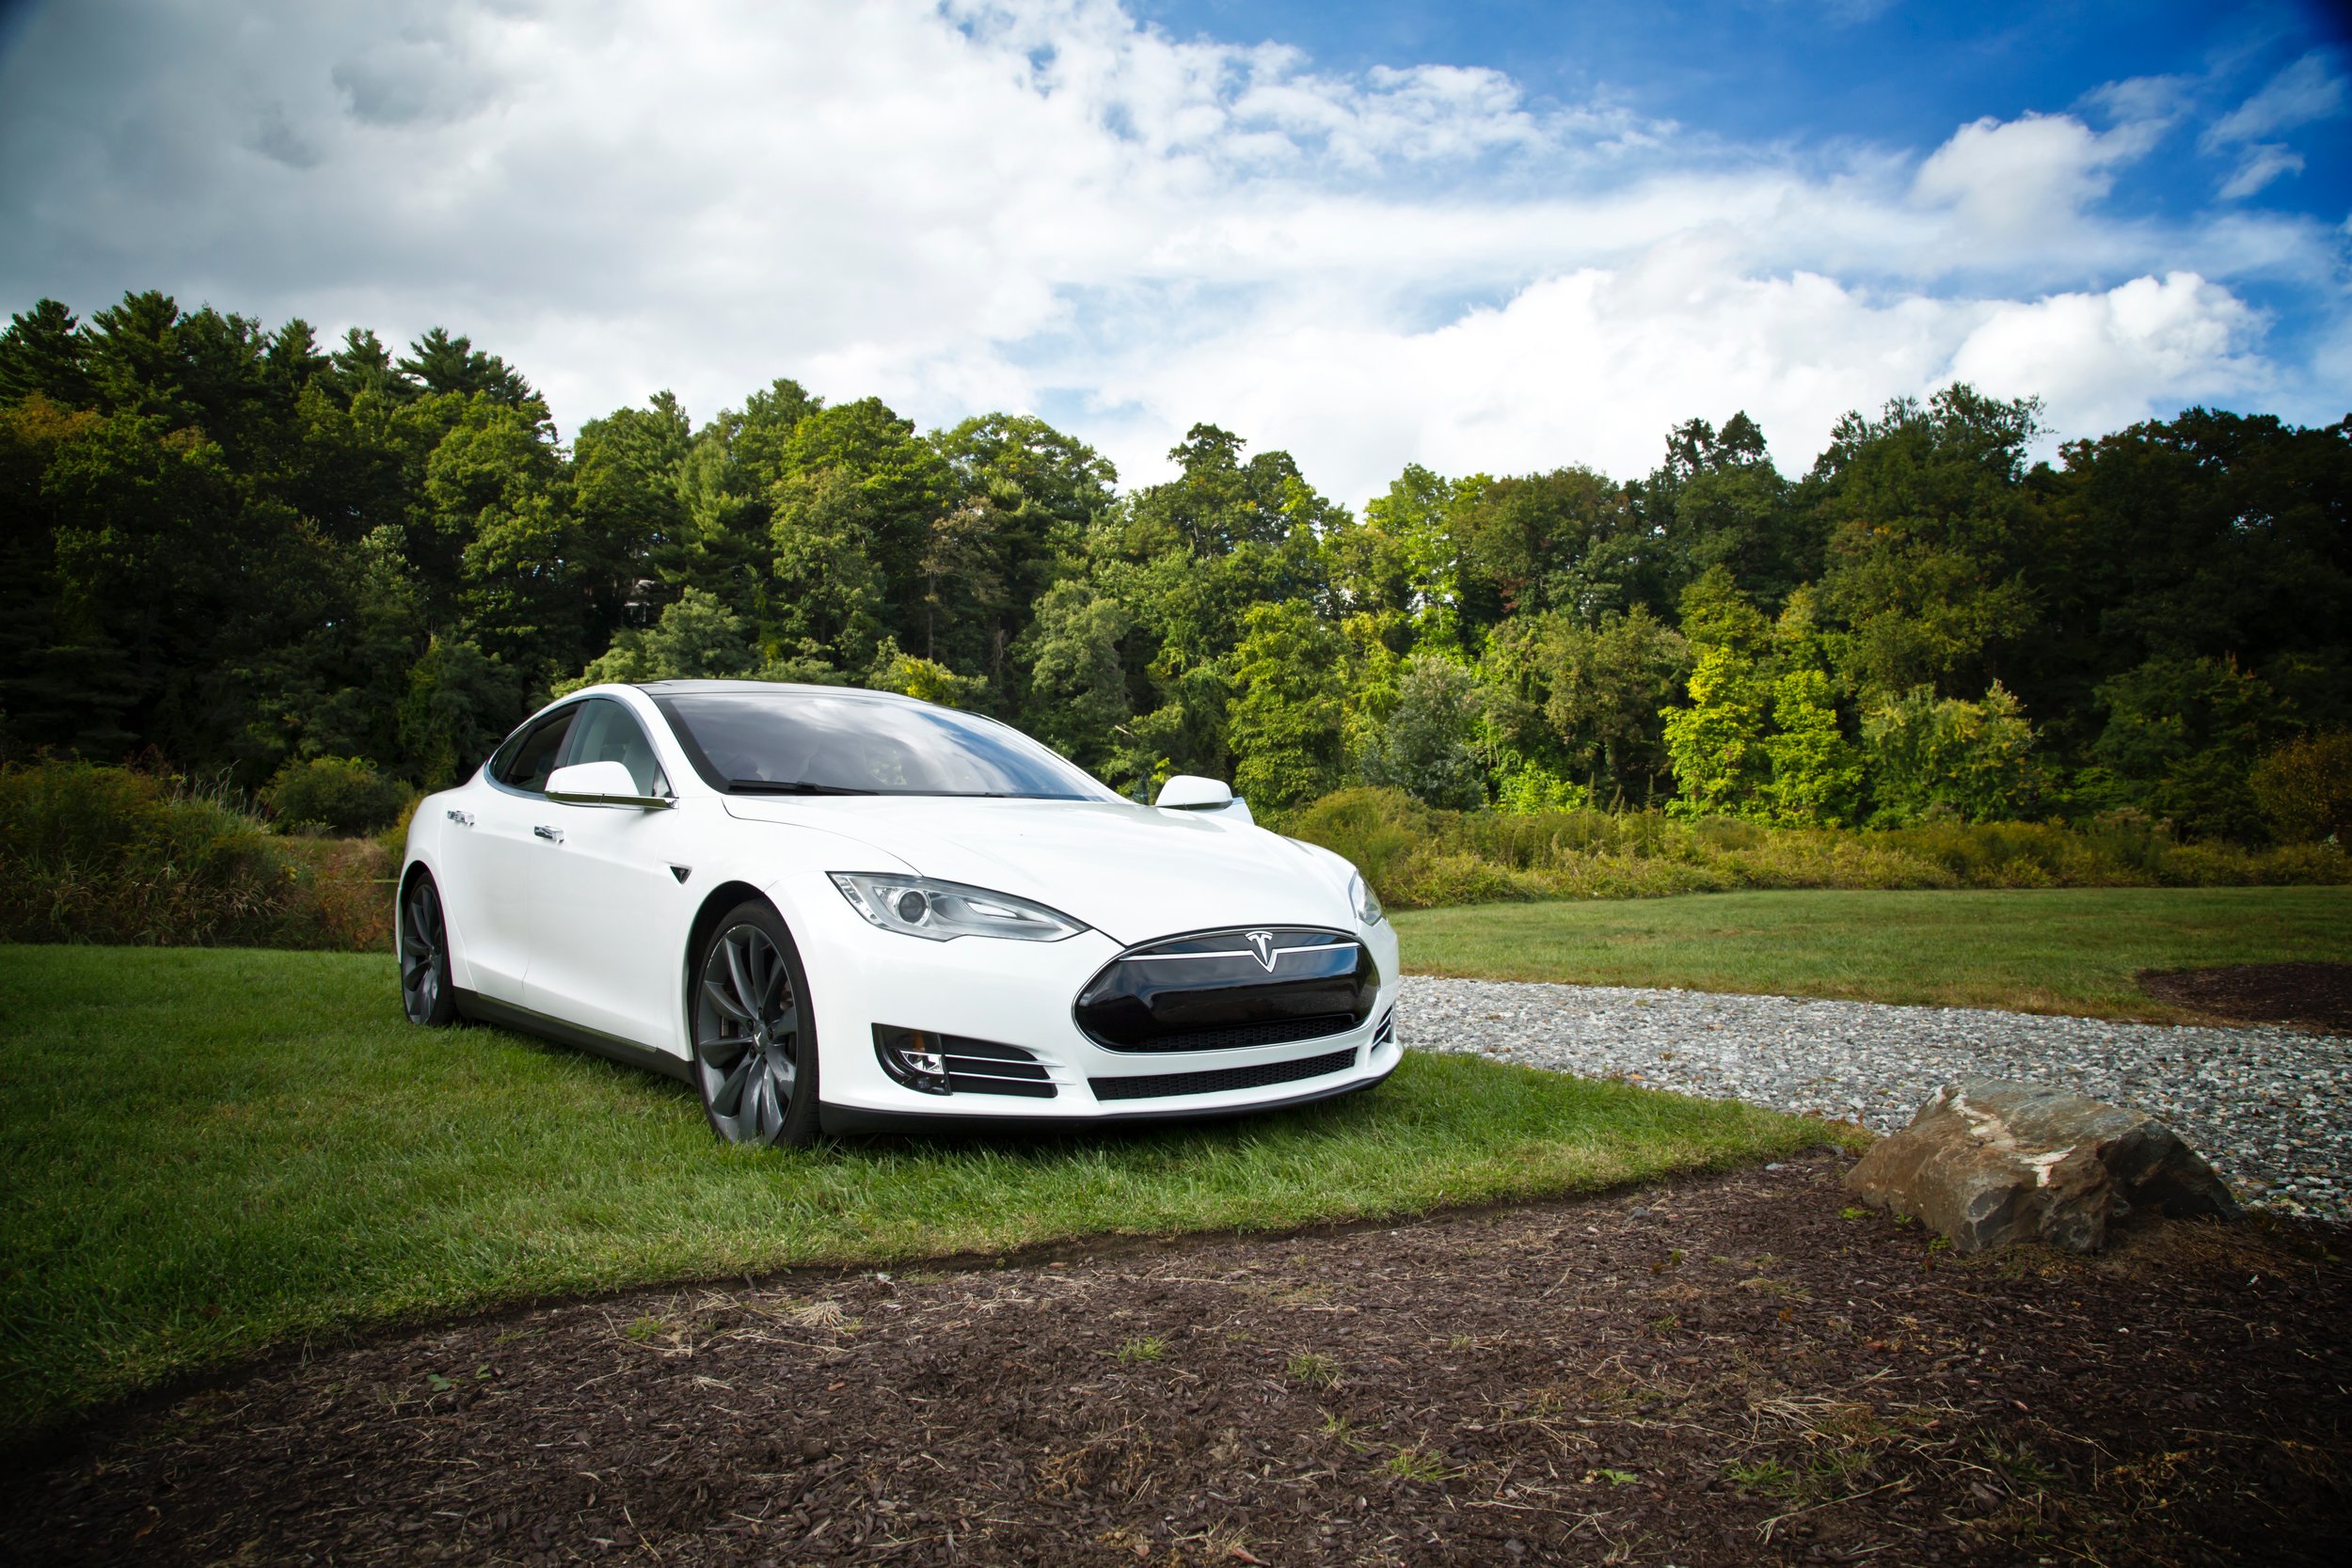 Parked Tesla outside